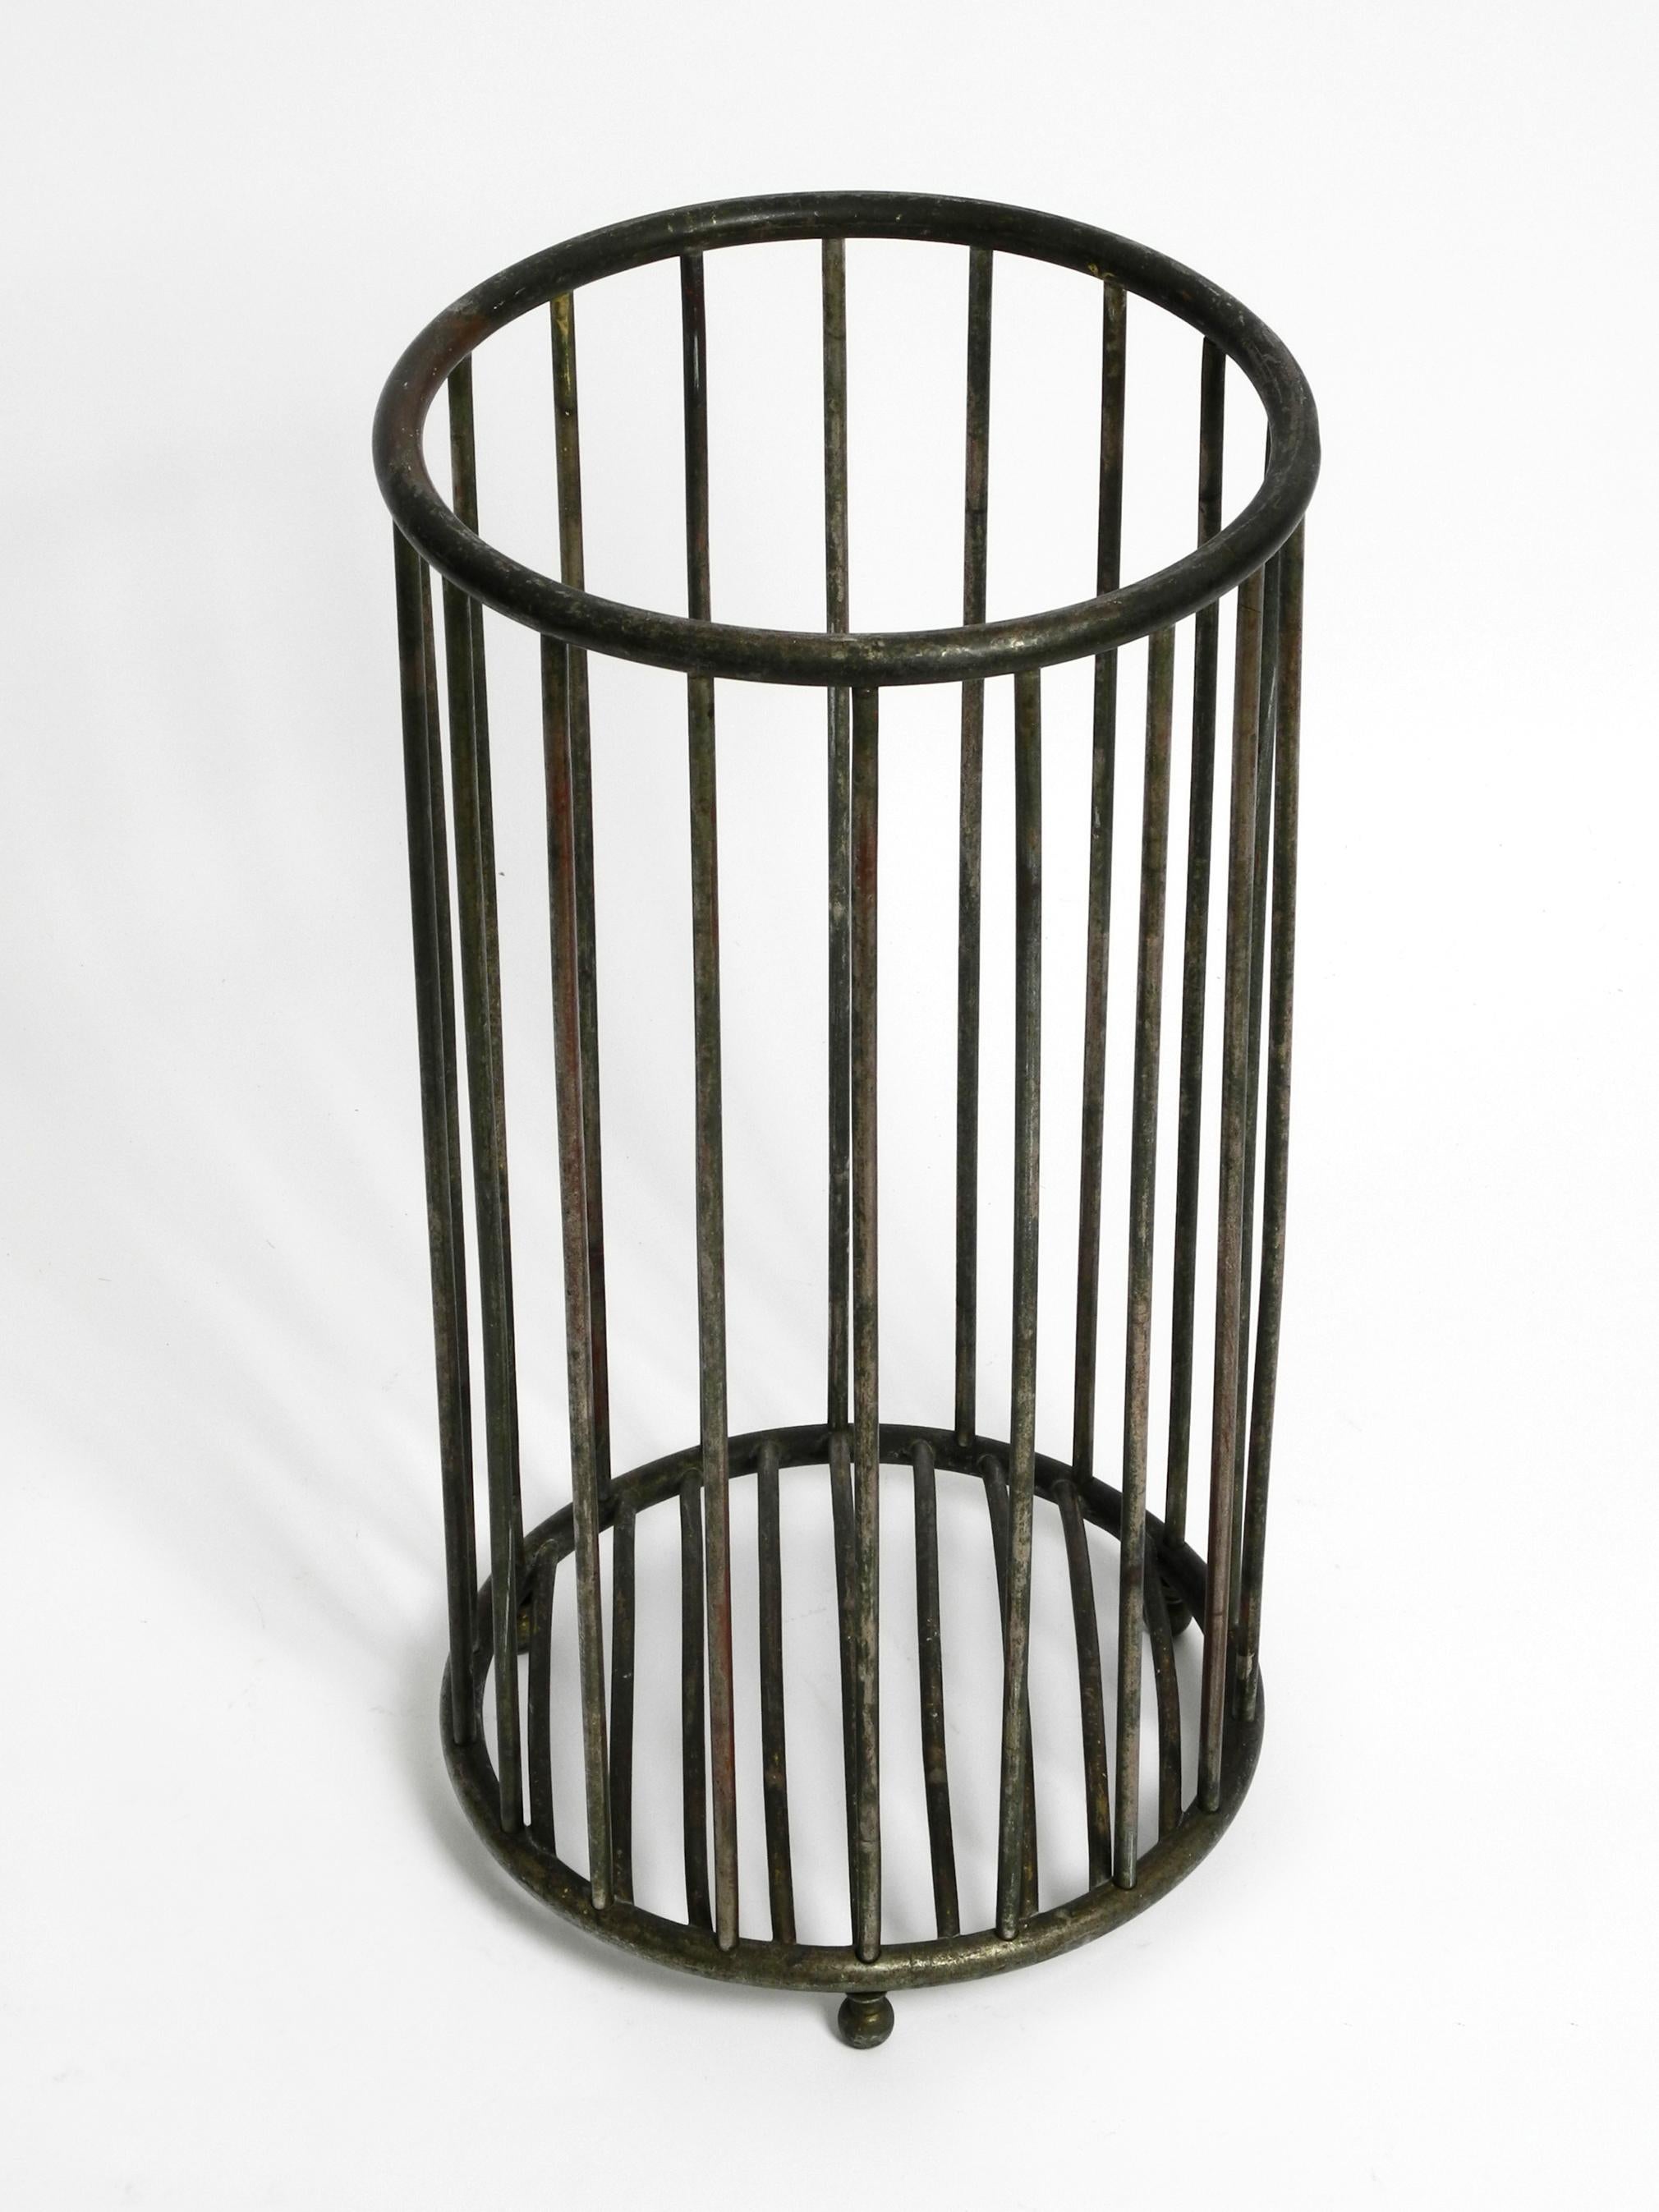 Original Mott's Plumbing Towel Basket Made of Nickel-Plated Brass from the 1910s 14